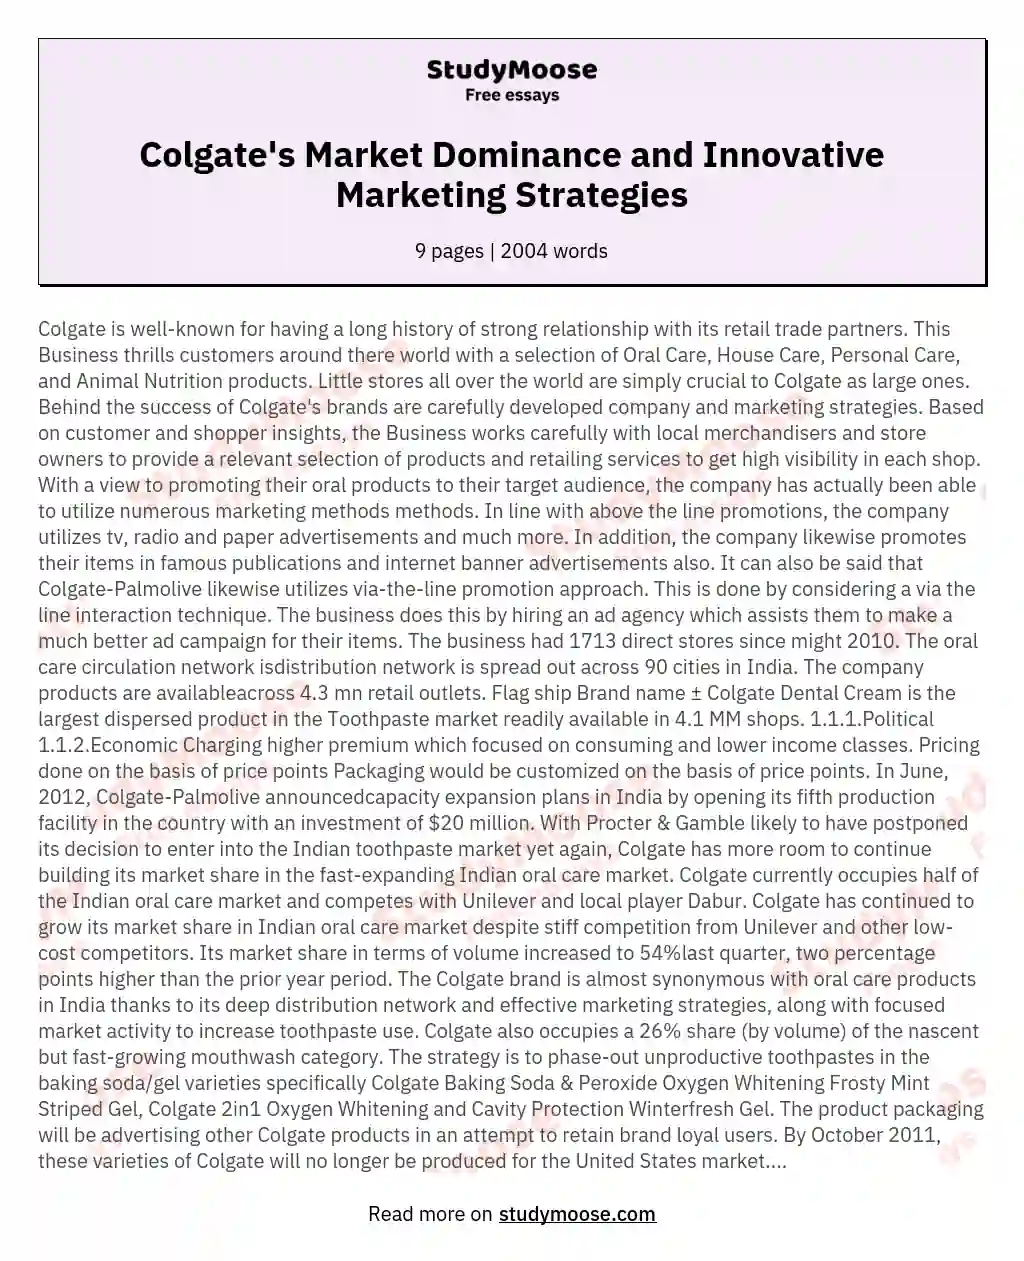 Colgate's Market Dominance and Innovative Marketing Strategies essay